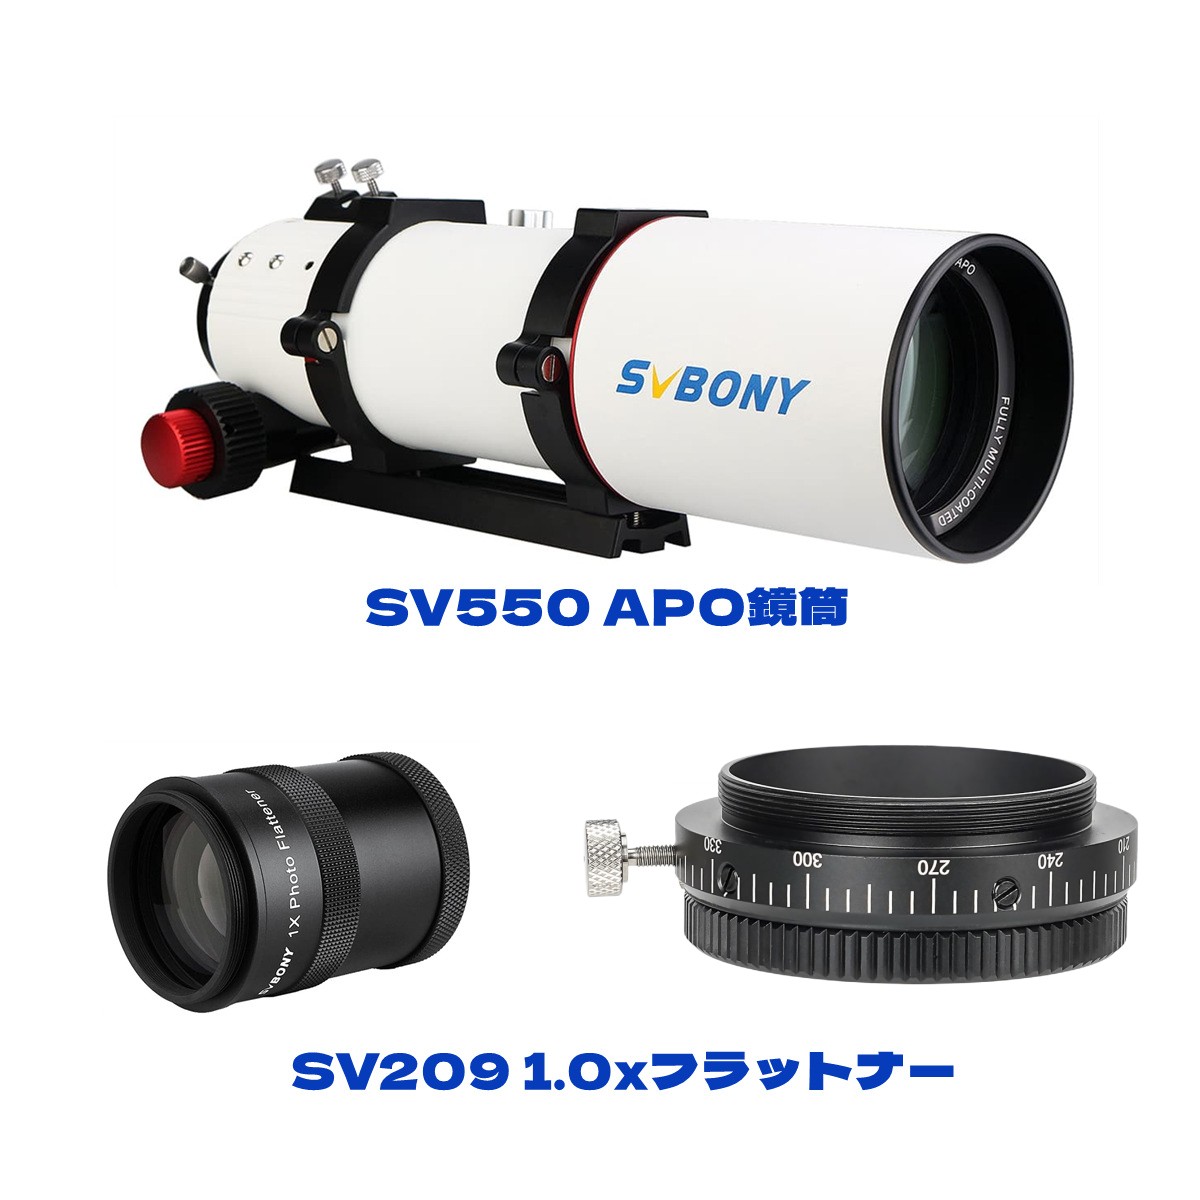 SVBONY SV550 APO天体望遠鏡 80mm [1.0xフラットナー付属]